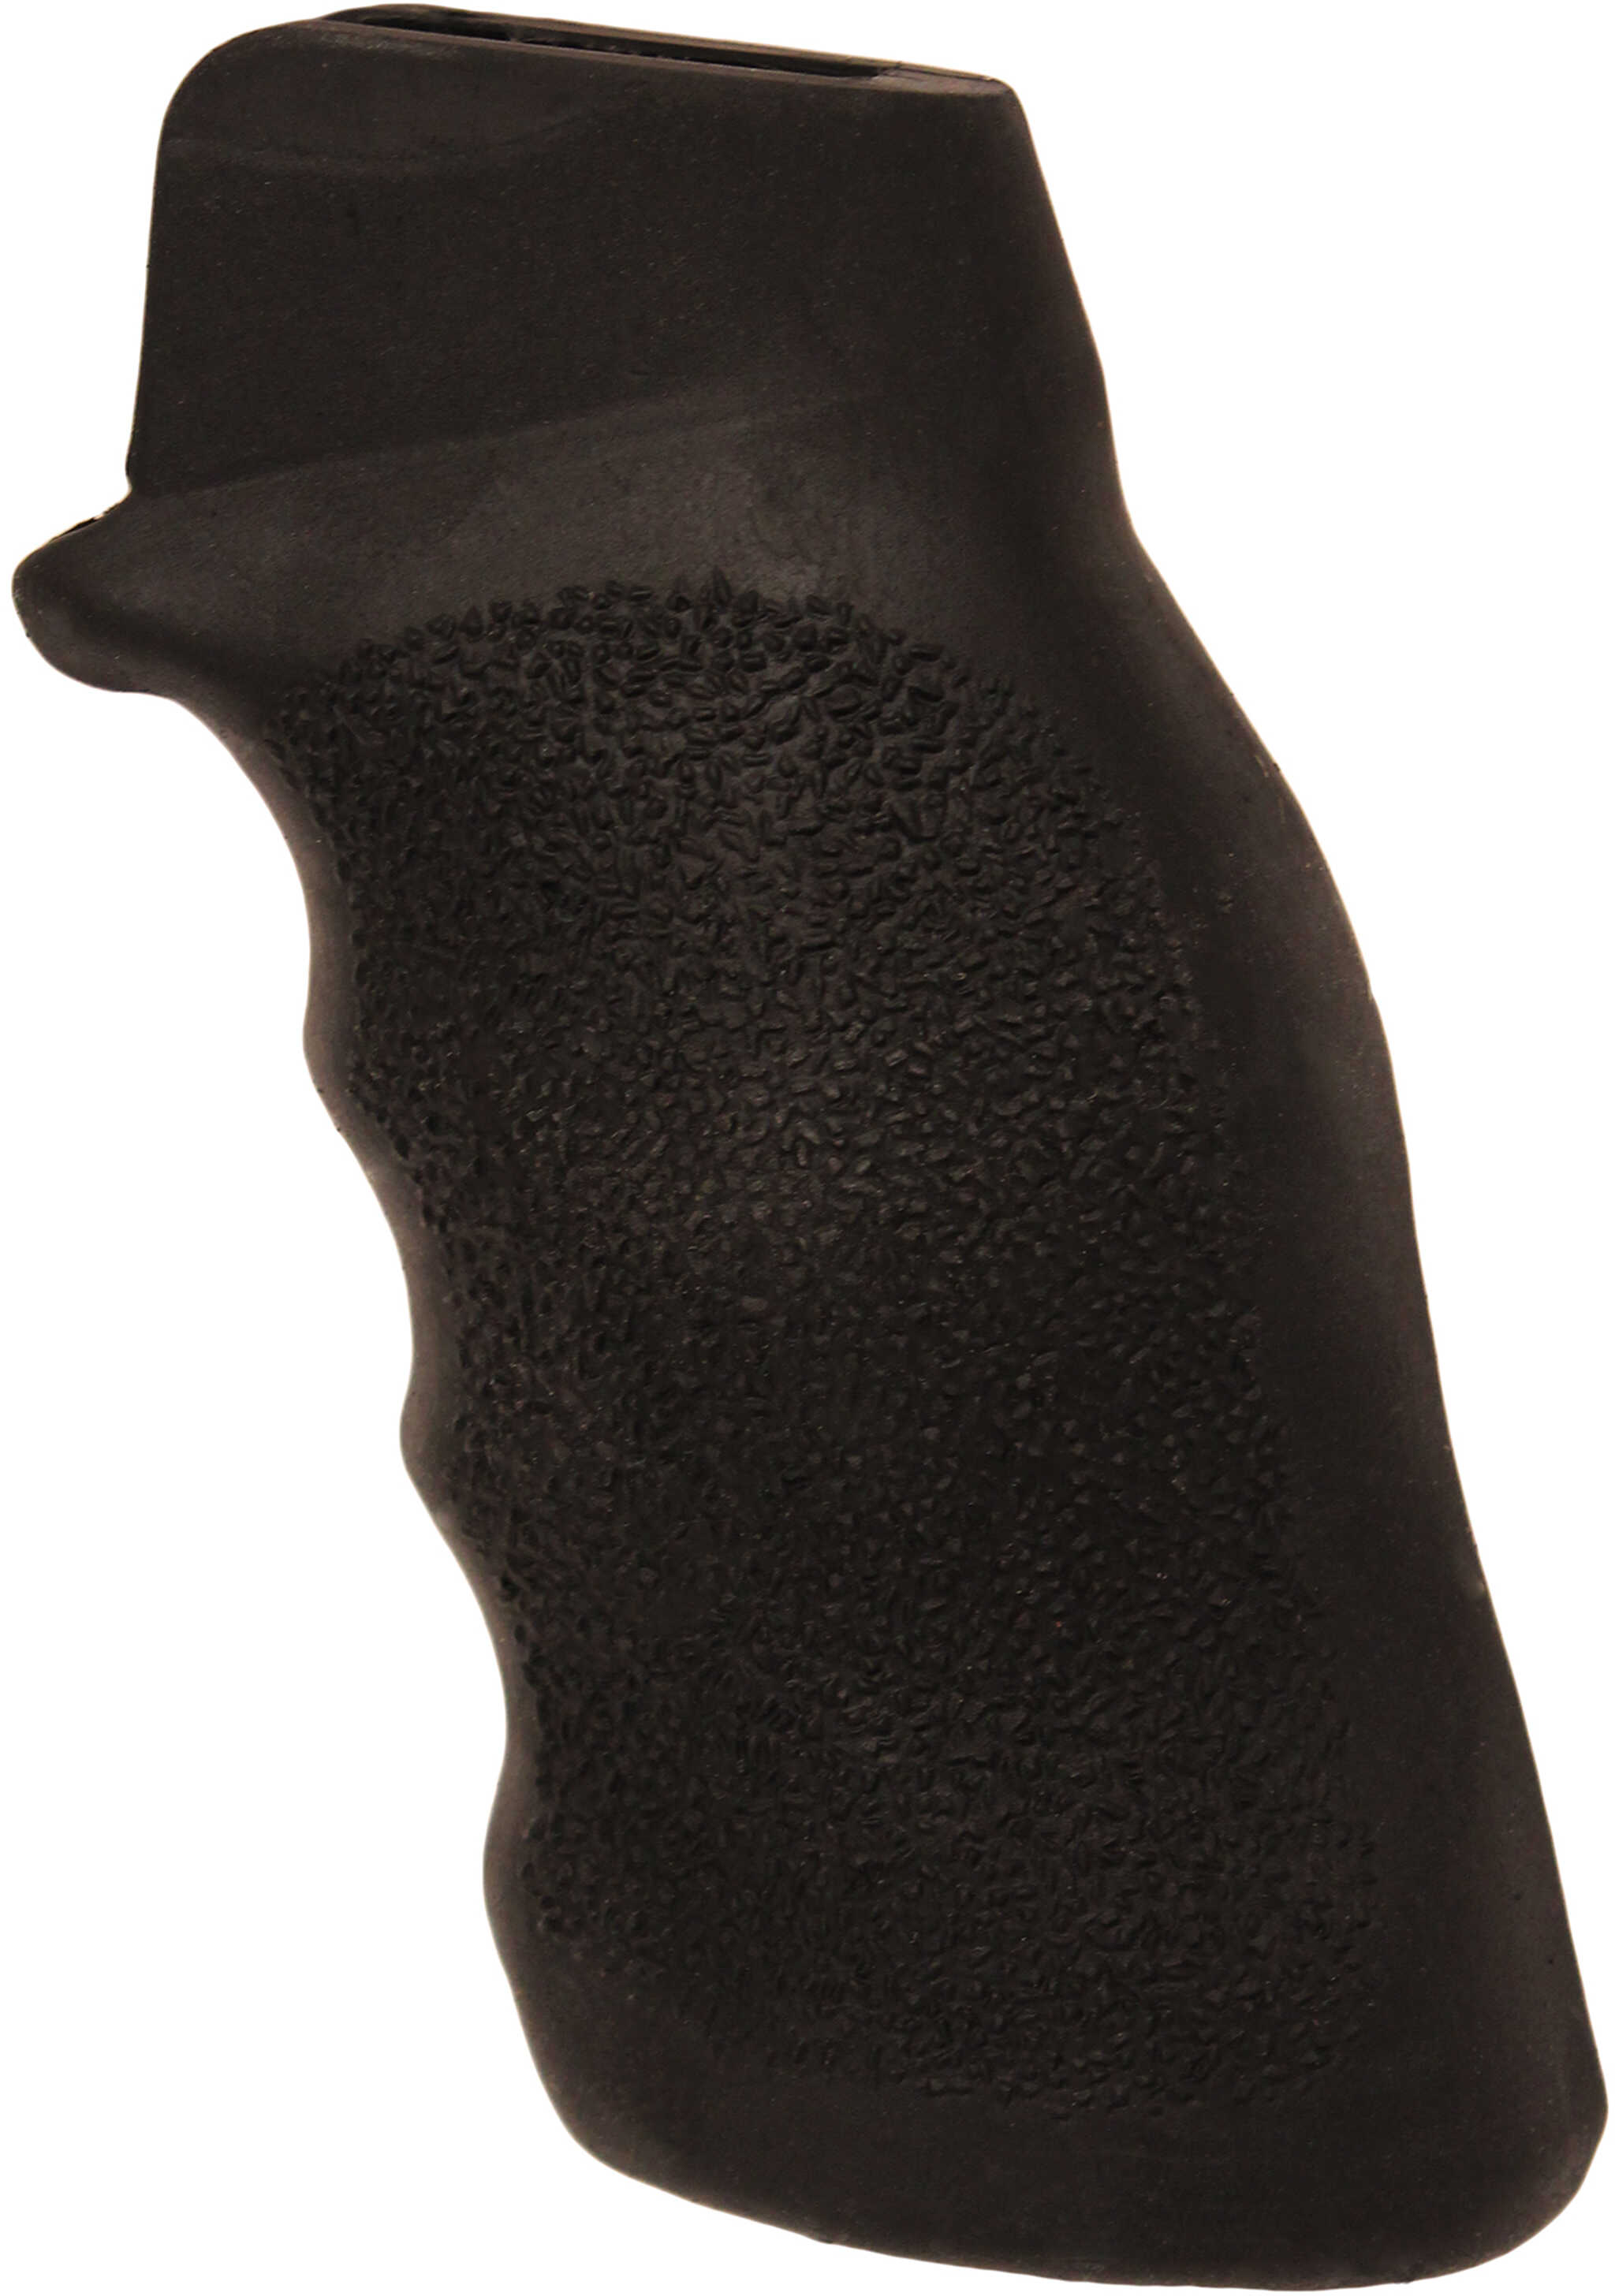 Ergo Grip Tactical DLX SureGrip Flat Top Fits AR-15/M16 Black Finish 4025-Bk